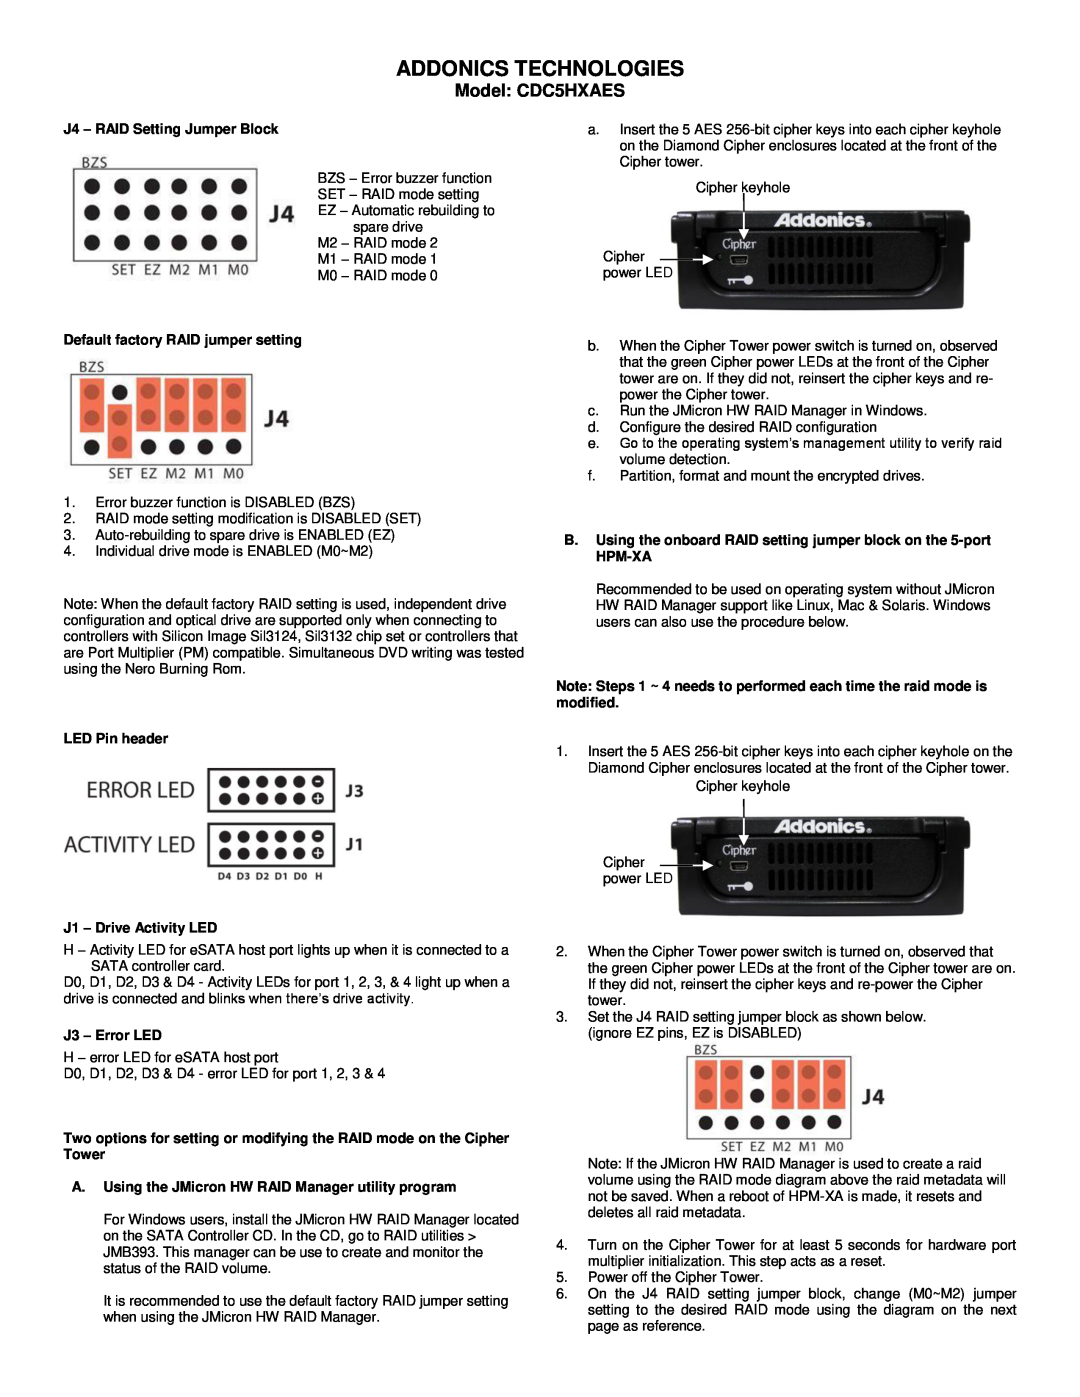 Addonics Technologies CDC5HXAES manual J4 - RAID Setting Jumper Block, Default factory RAID jumper setting, J3 - Error LED 